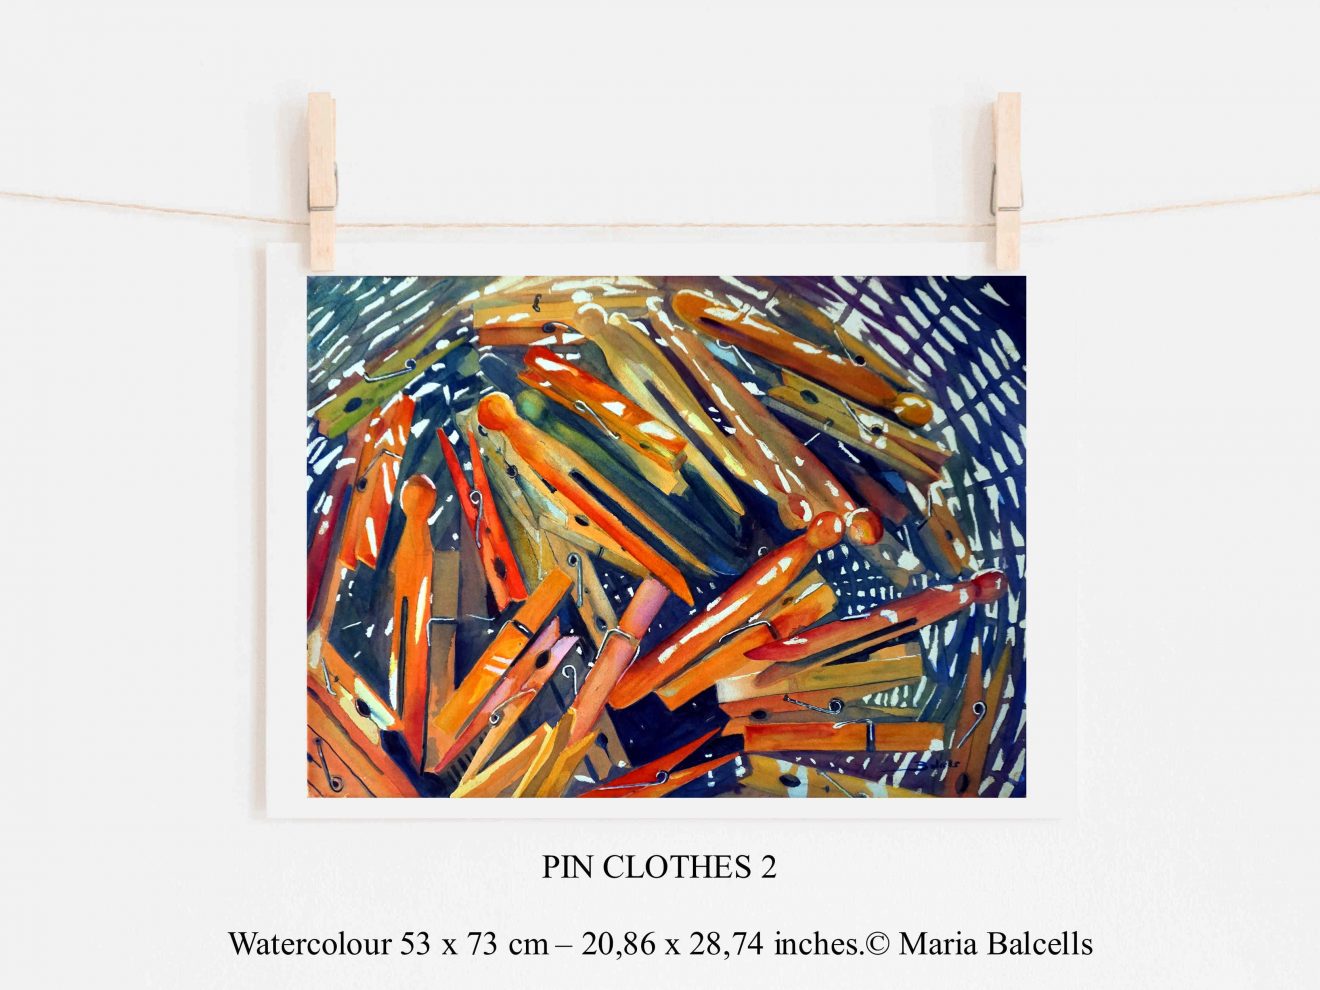 Watercolour Pin Clothes -2 artwork by Maria Balcells